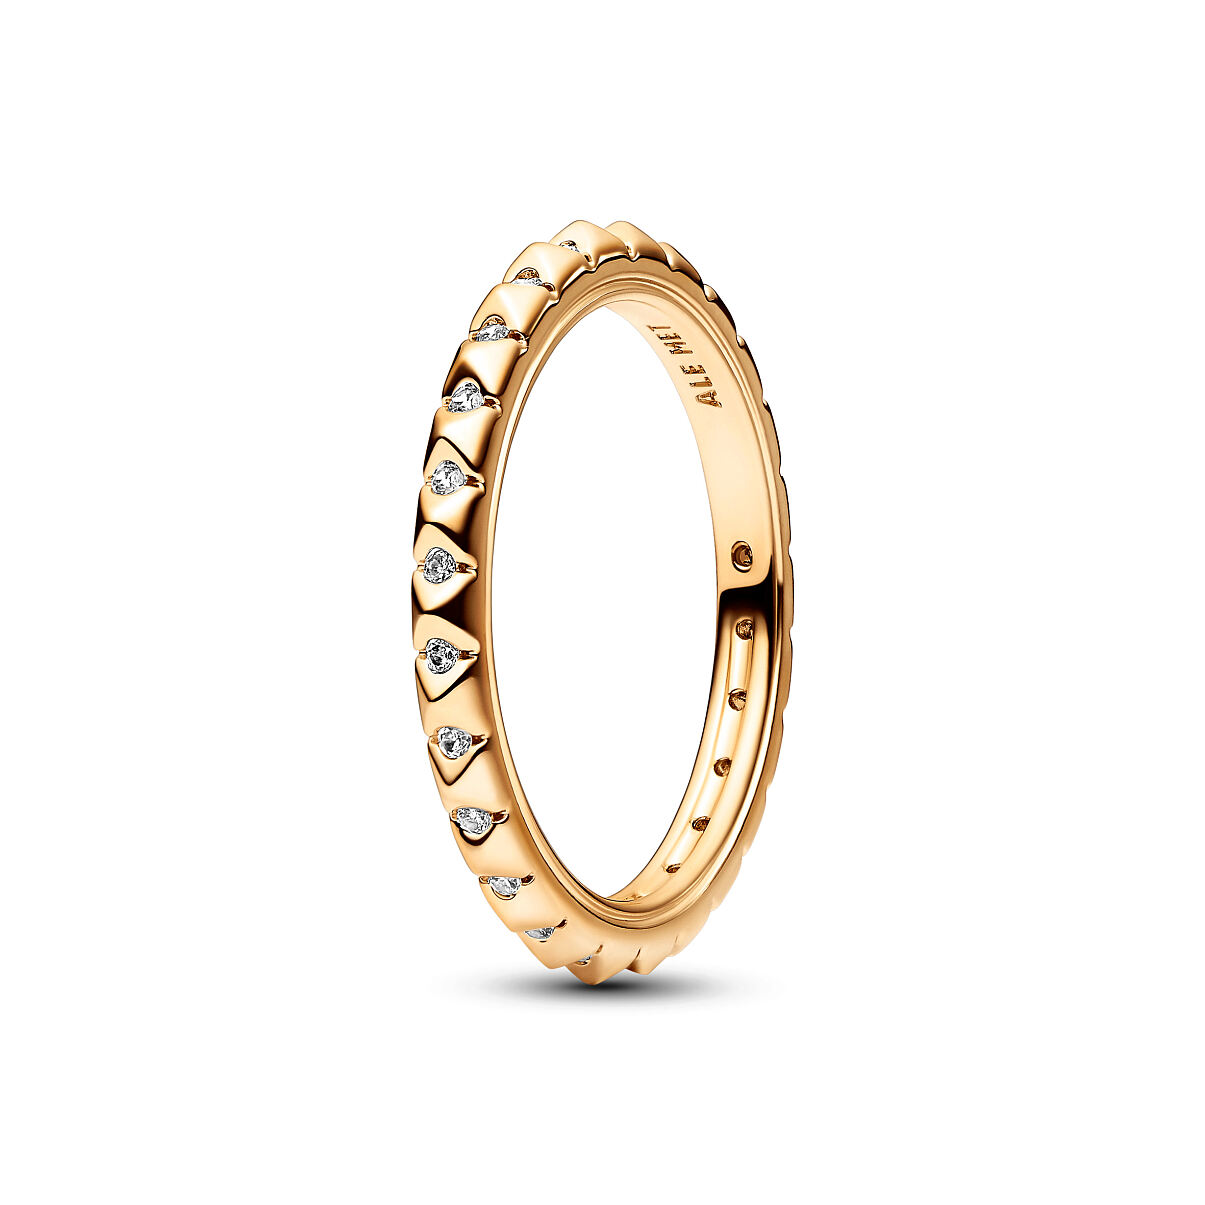 Pandora_Ring_14k Gold-plated_Cubic Zirconia_162800C_49,00 Euro